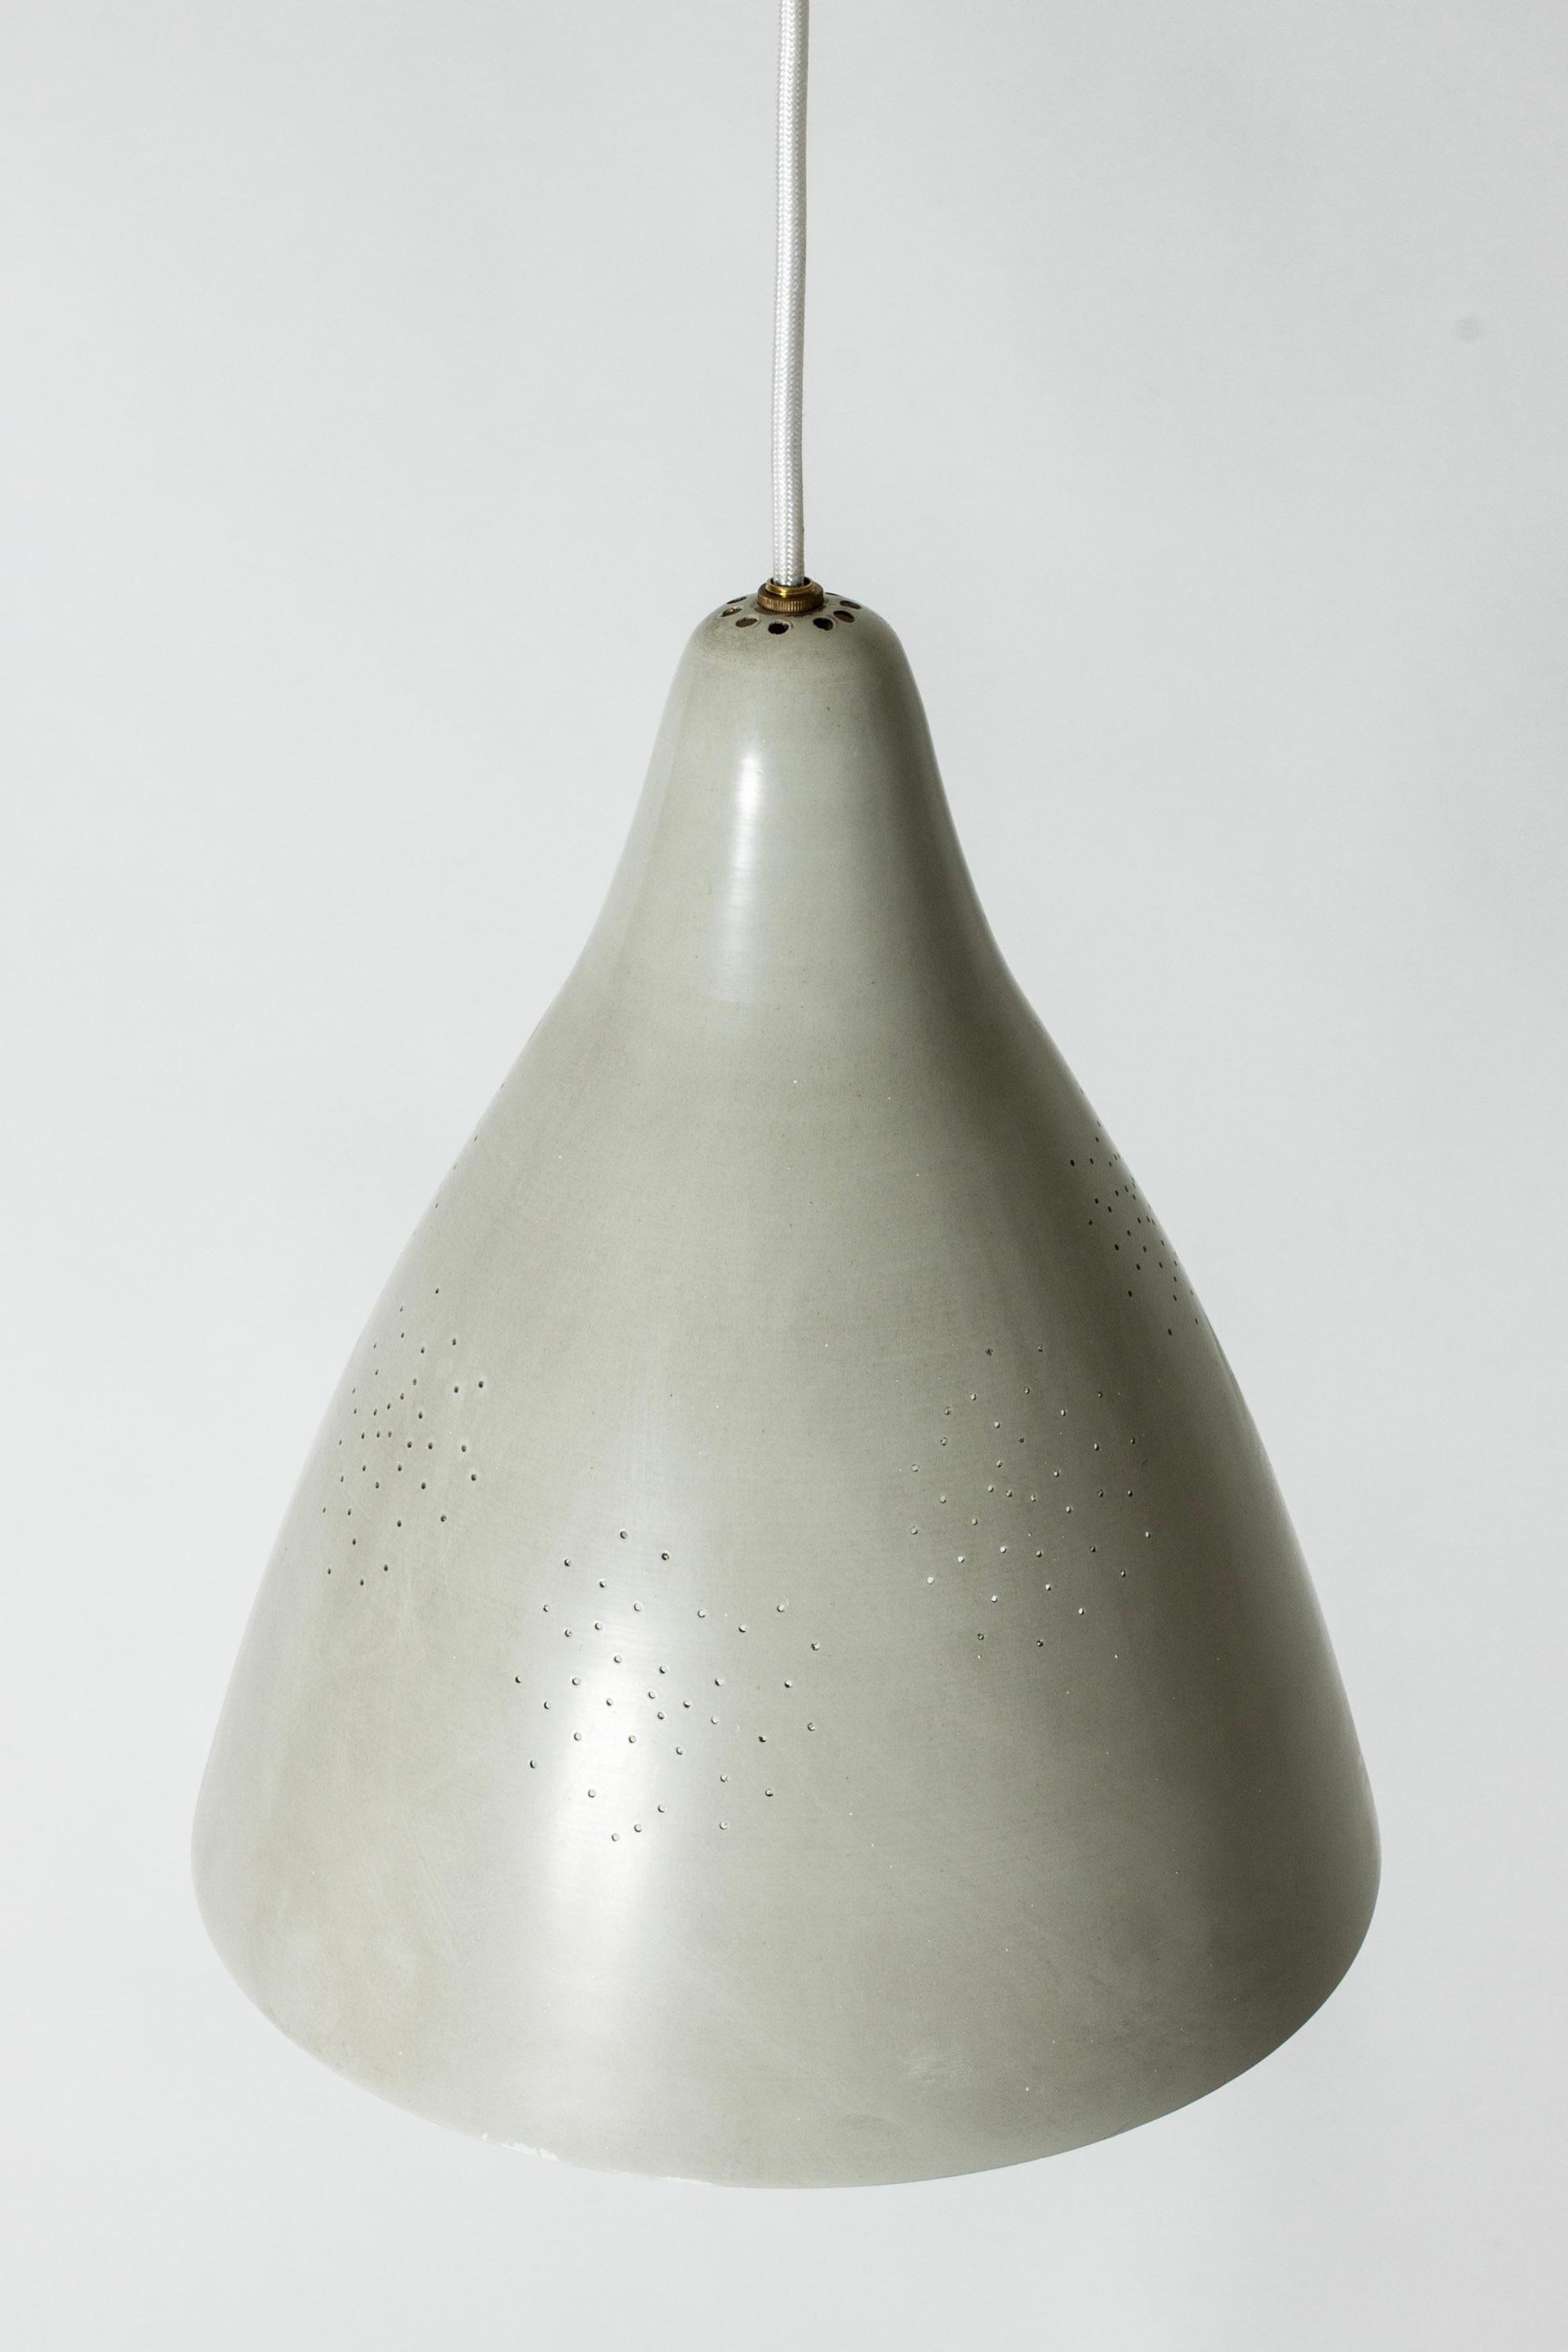 Scandinavian Modern Midcentury Metal Pendant Lamp by Lisa Johansson-Pape, Orno, Finland, 1950s For Sale